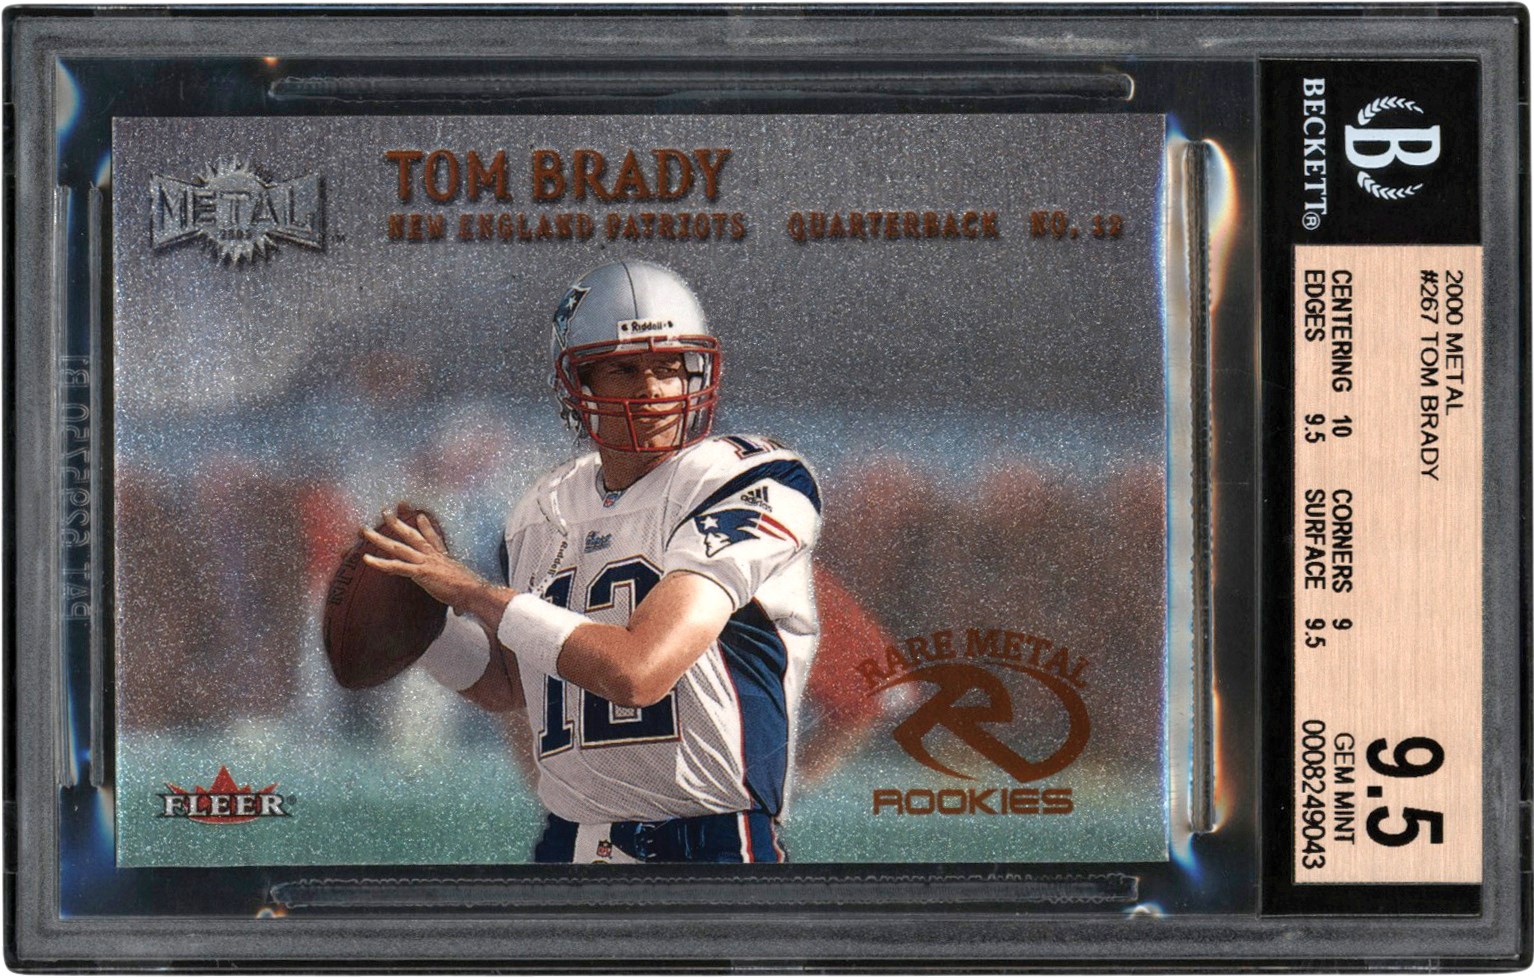 - 2000 Fleer Metal Football #267 Tom Brady Rookie Card BGS GEM MINT 9.5